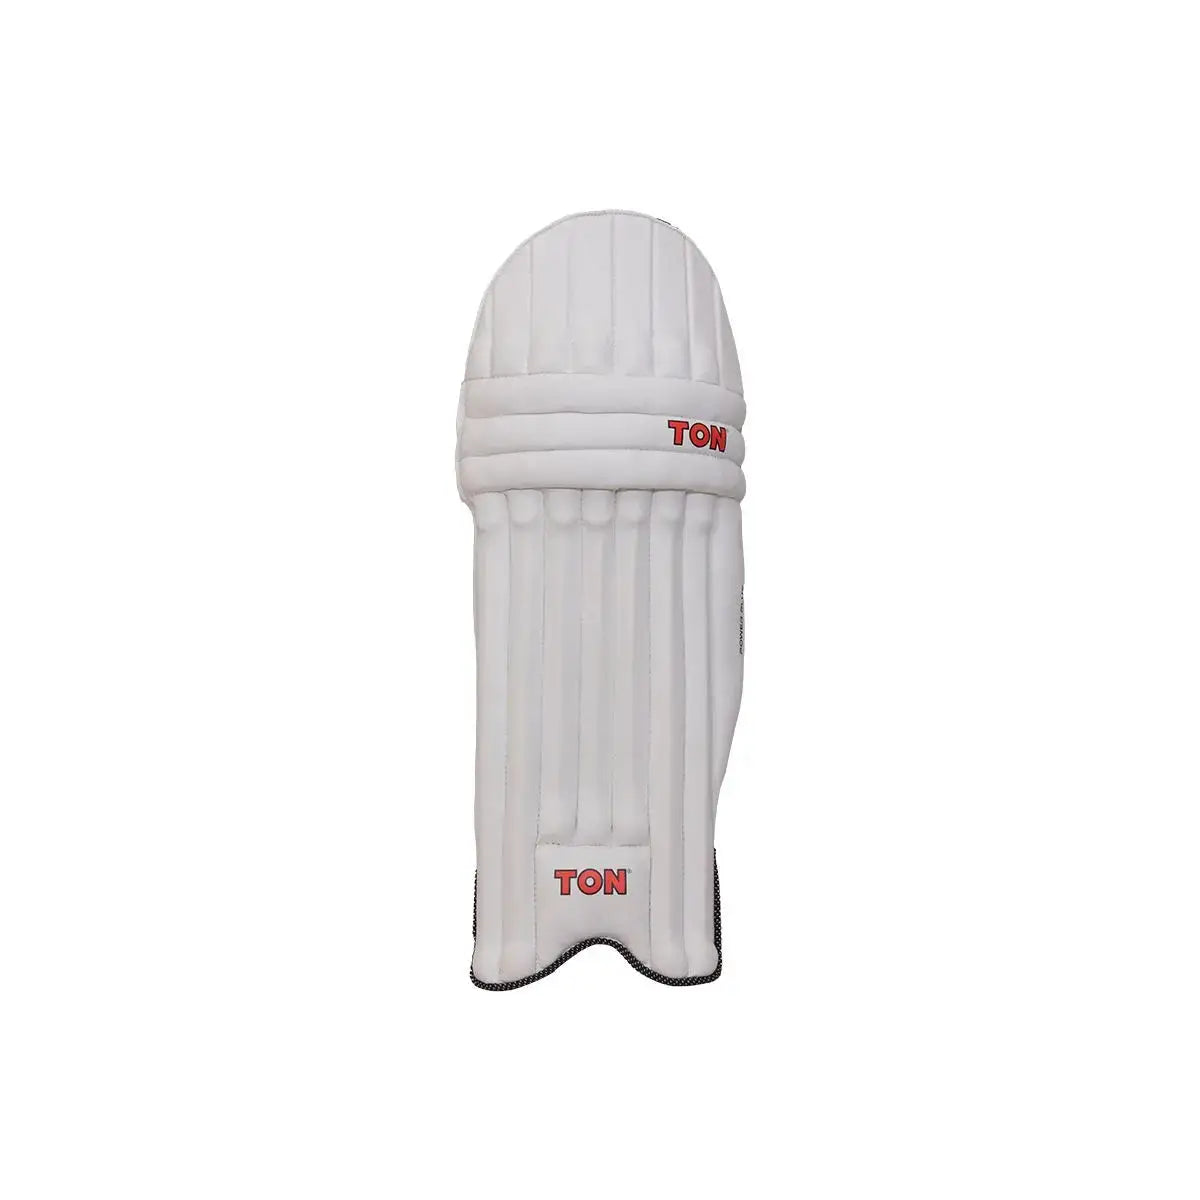 SS Ton Power Plus Cricket Batting Pads- Premium Quality with Lightweight - PADS - BATTING